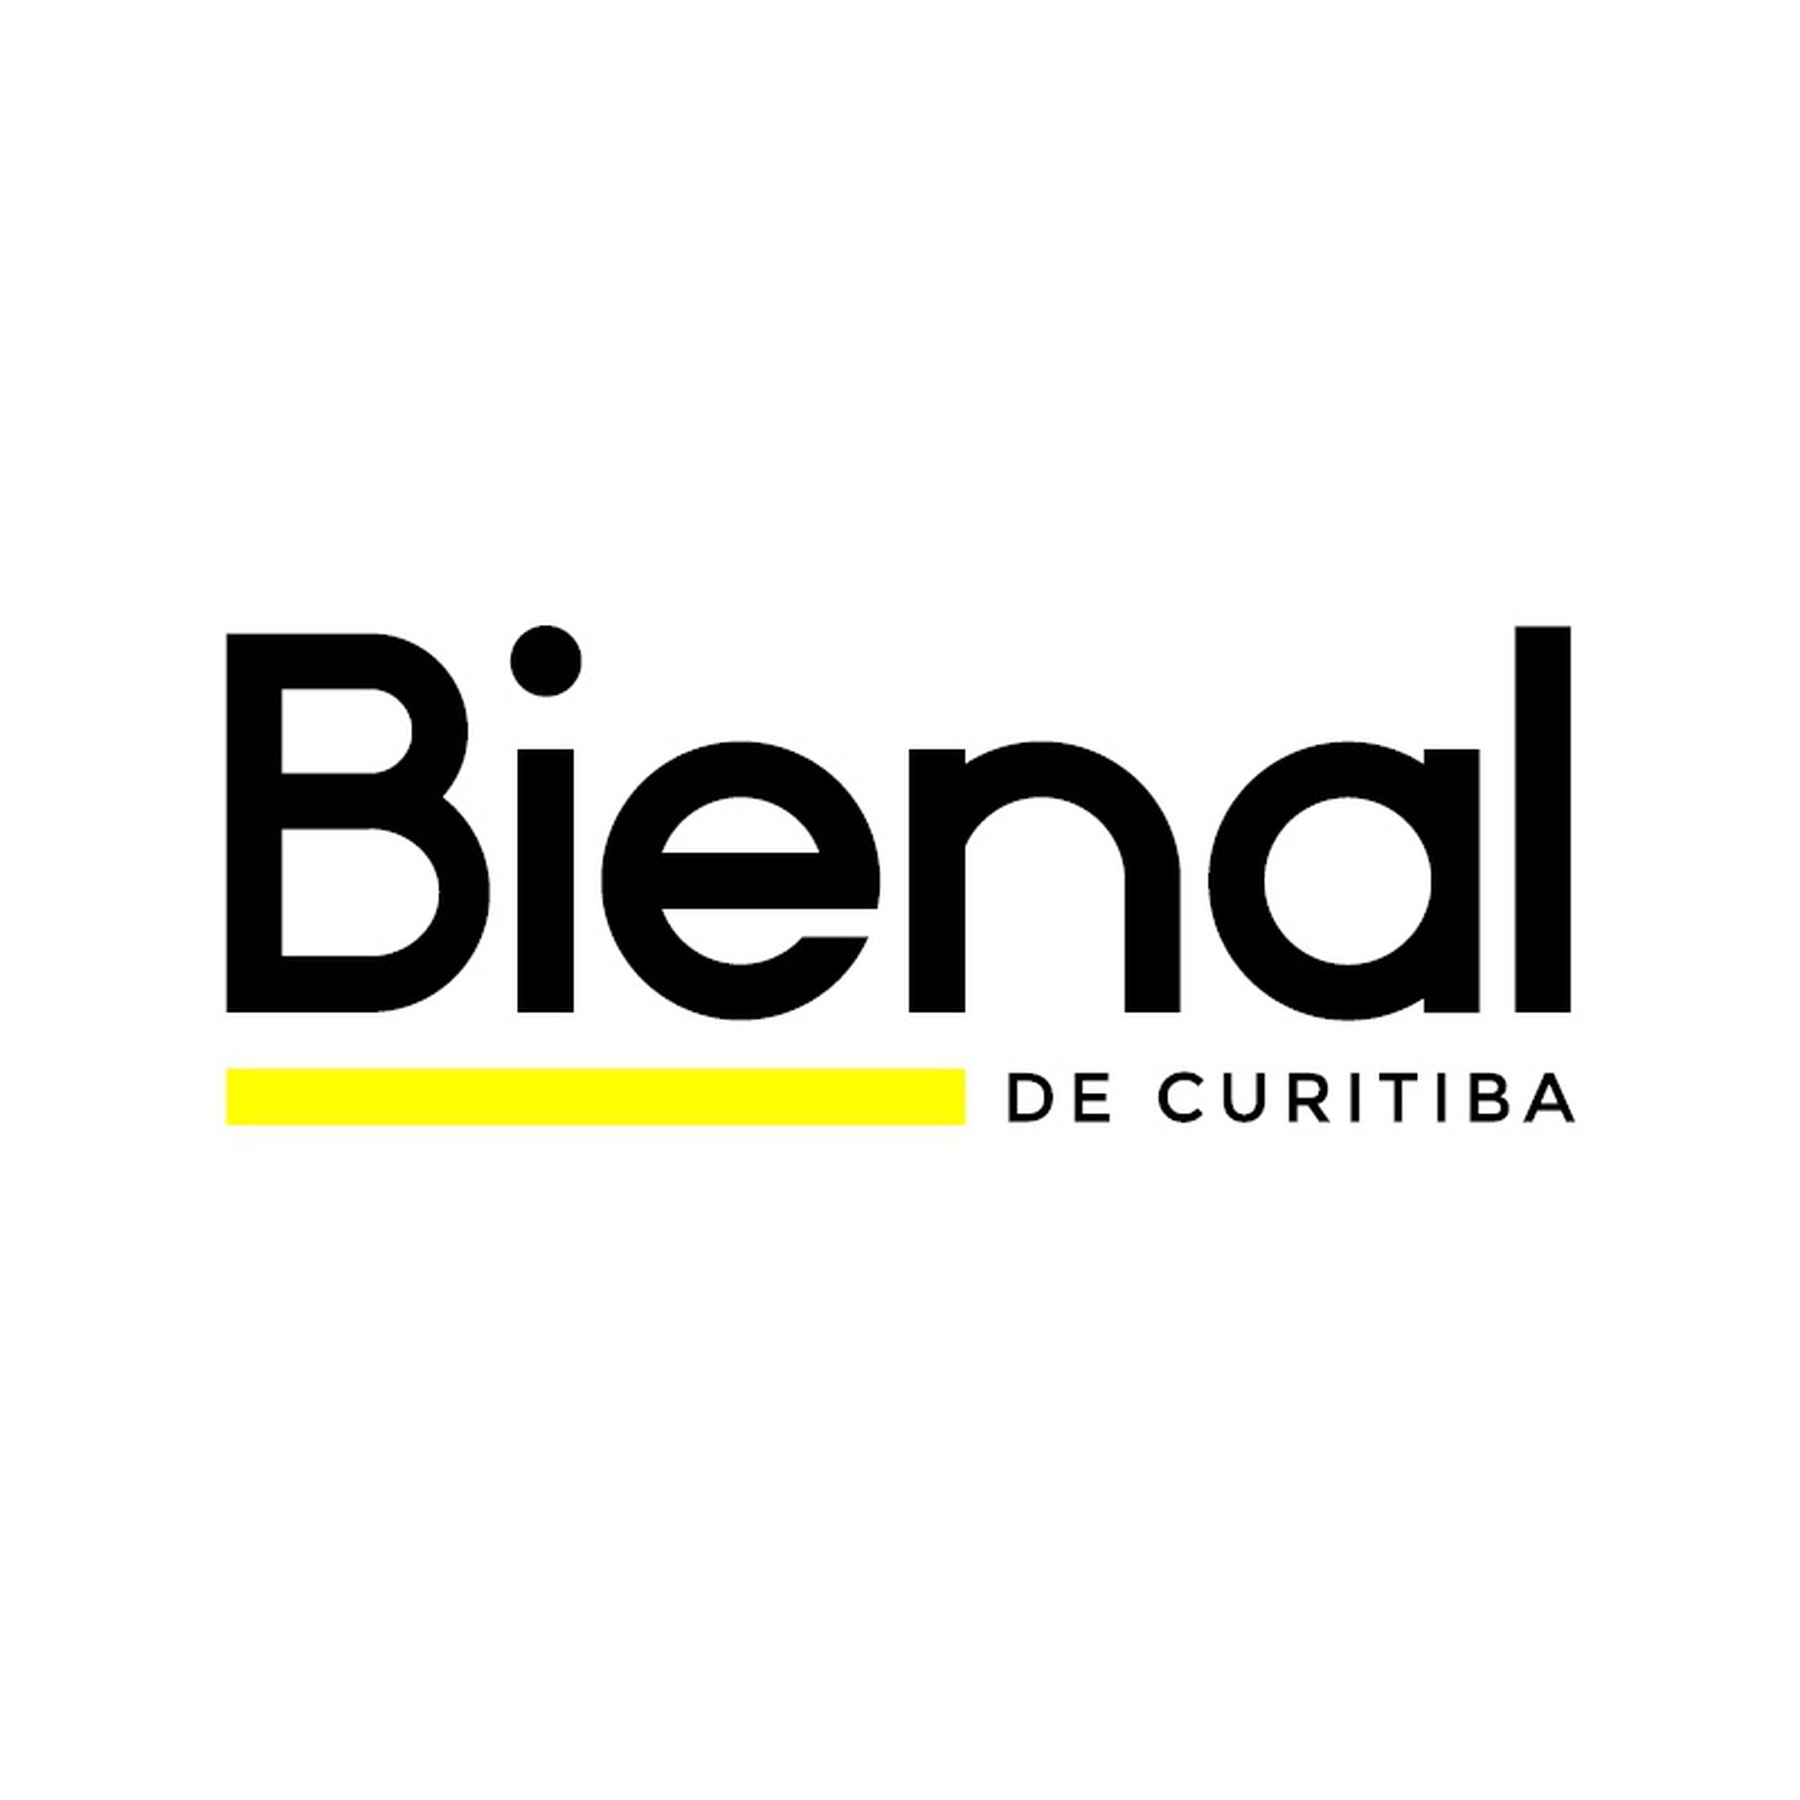 14th Curitiba International Biennial of Contemporary Art